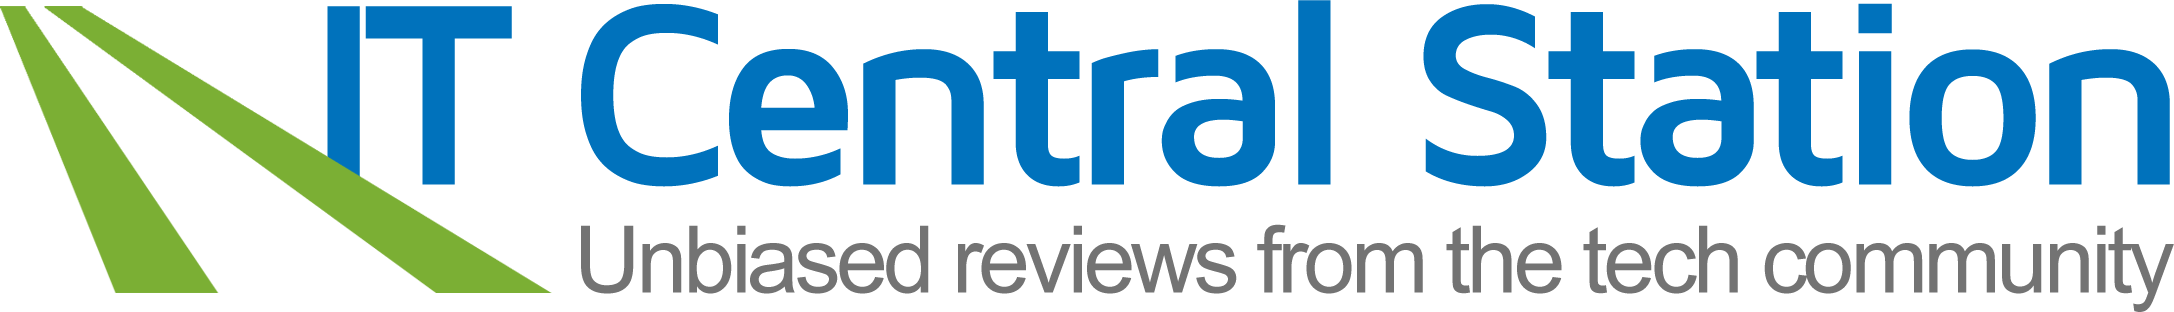 IT Central Station Review platform